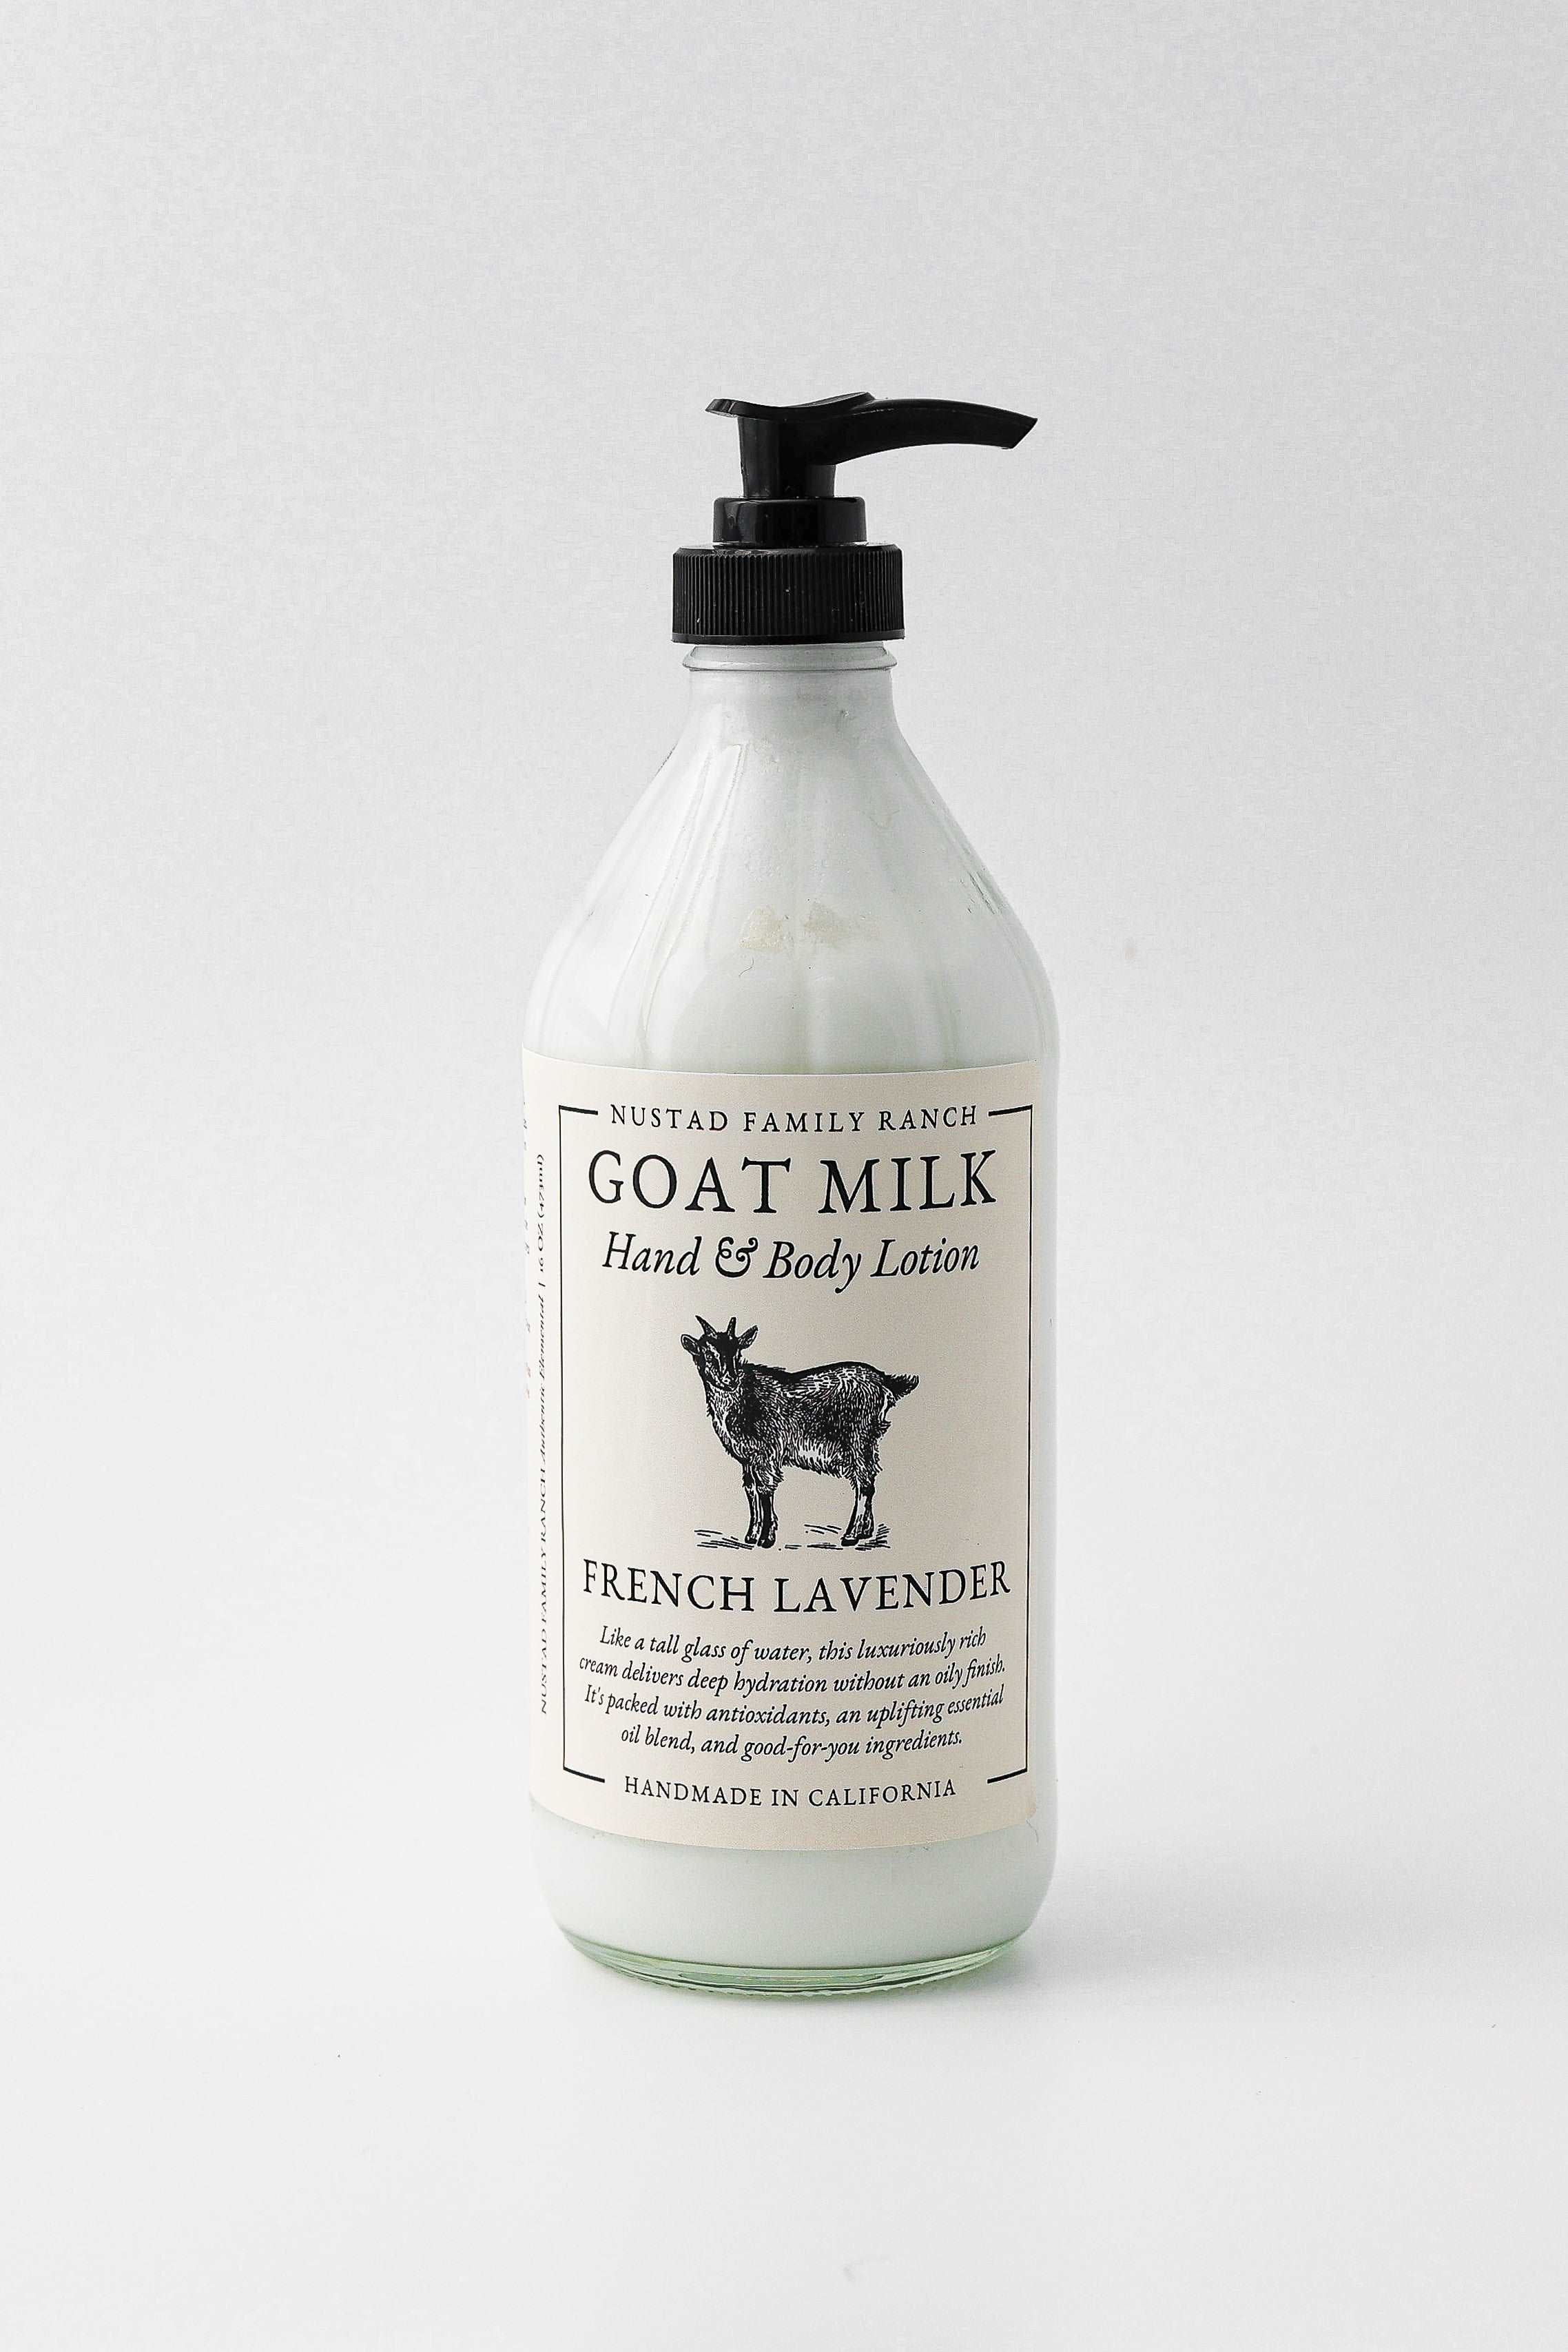 Lavender Hydrating Goats Milk Soap